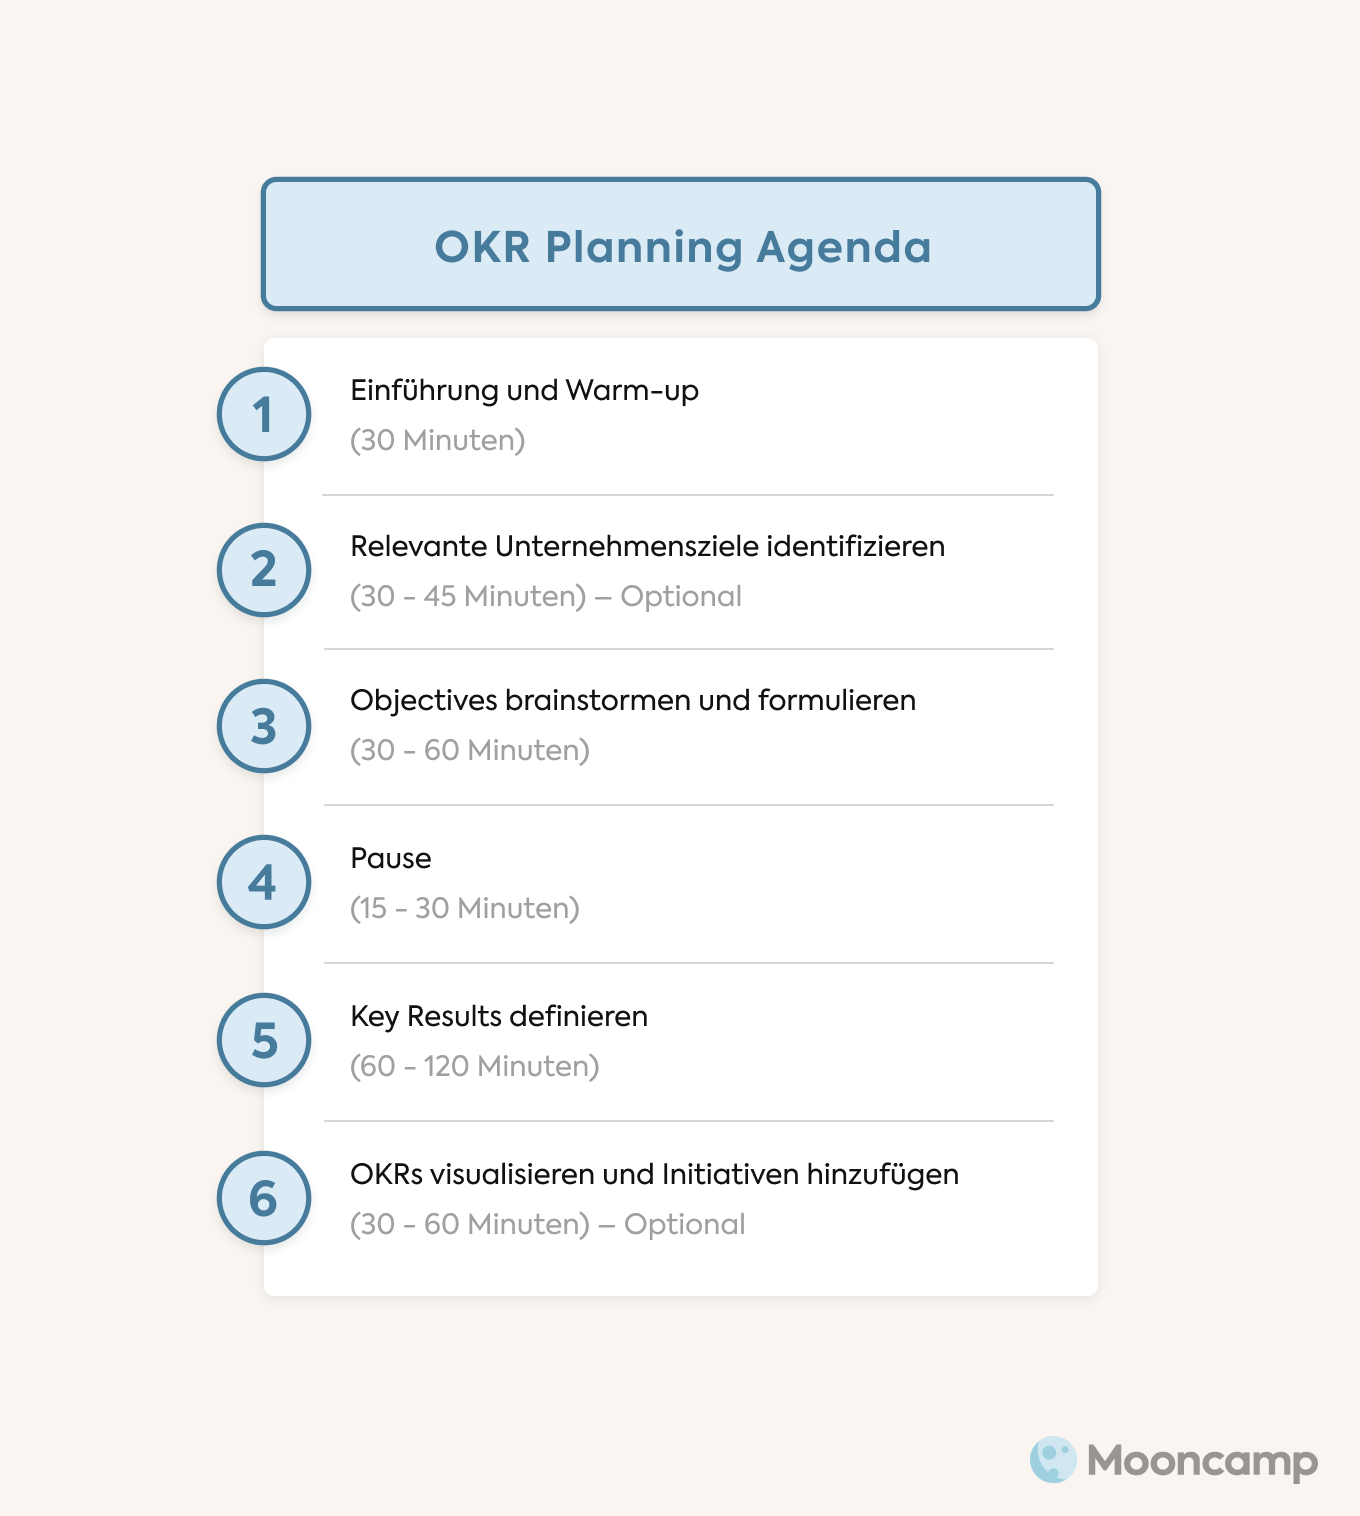 OKR Planning Agenda